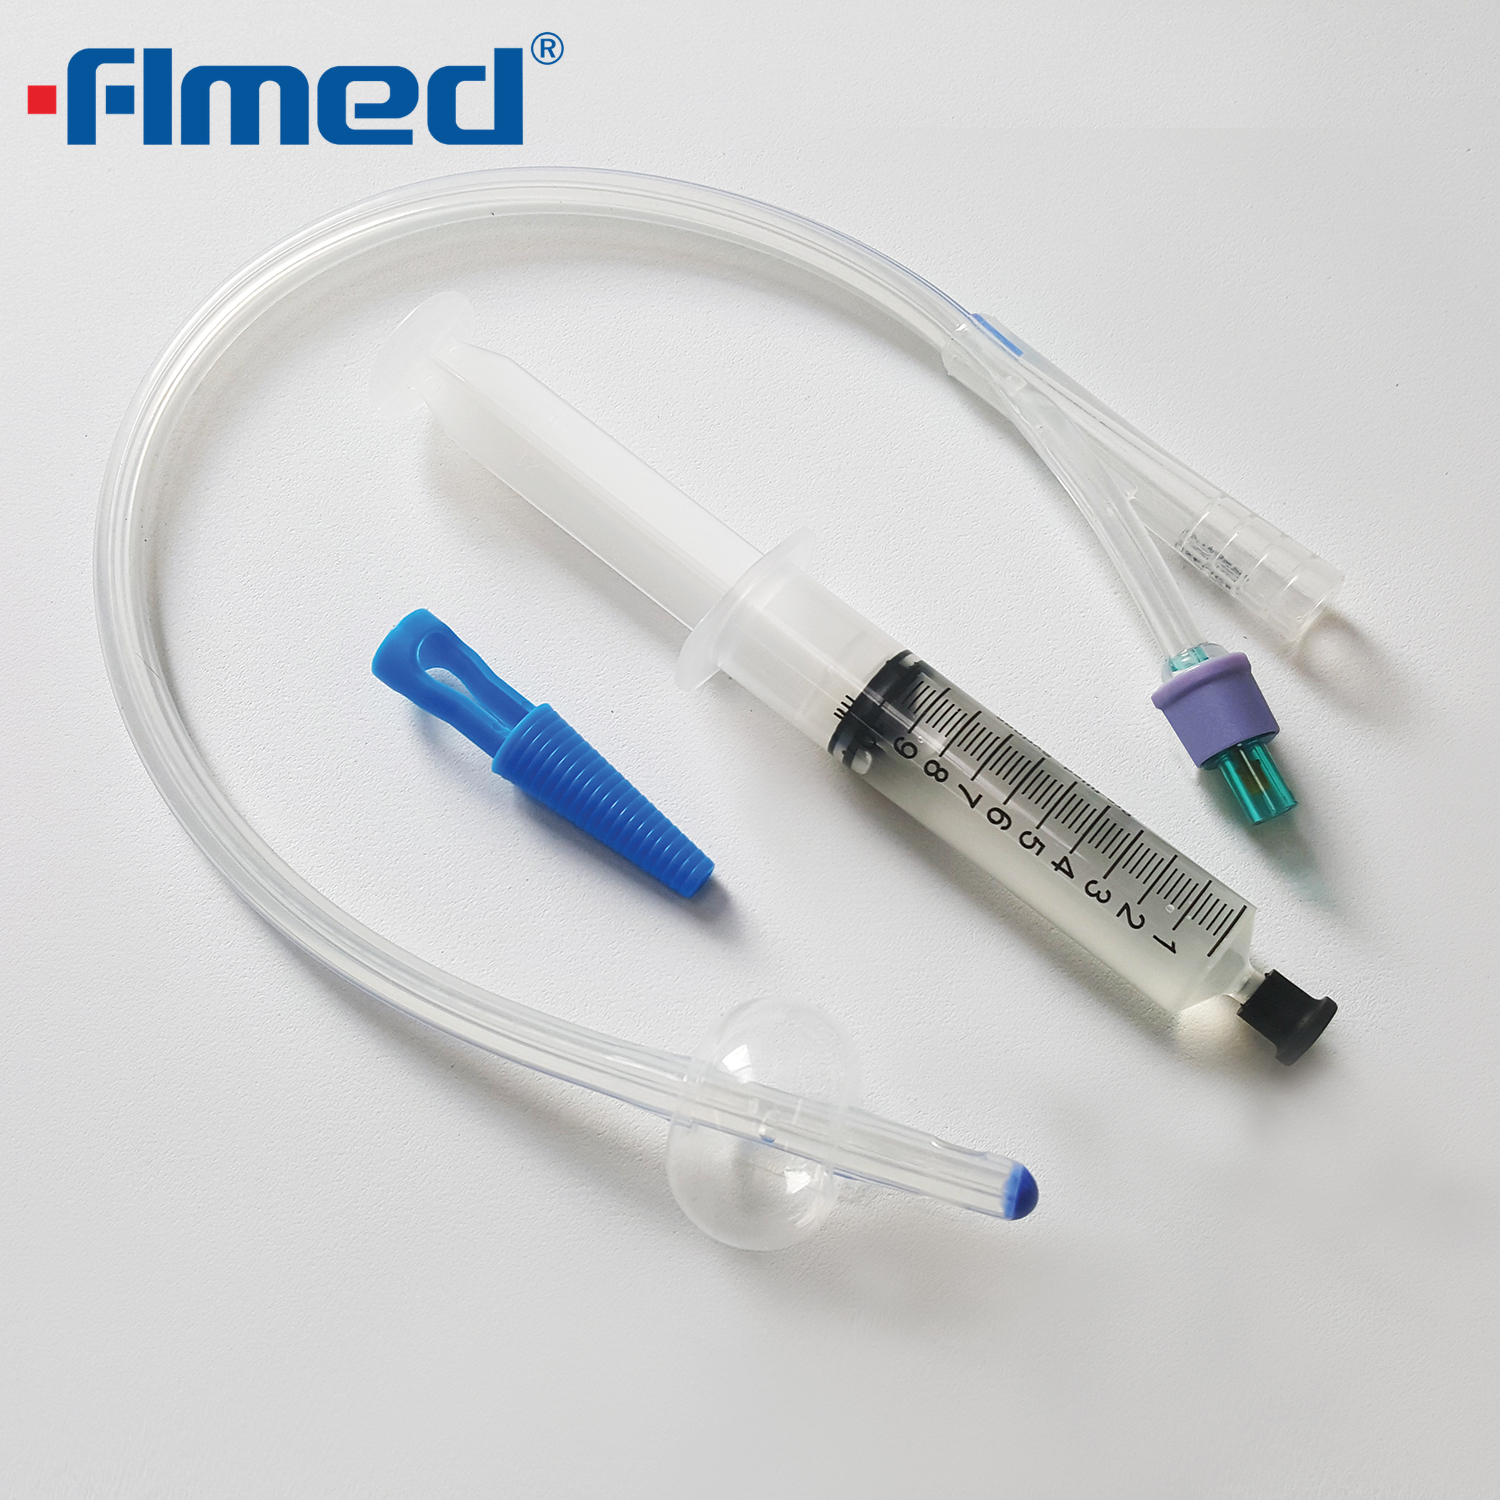 2-way Silicone Foley Catheter Pediatric